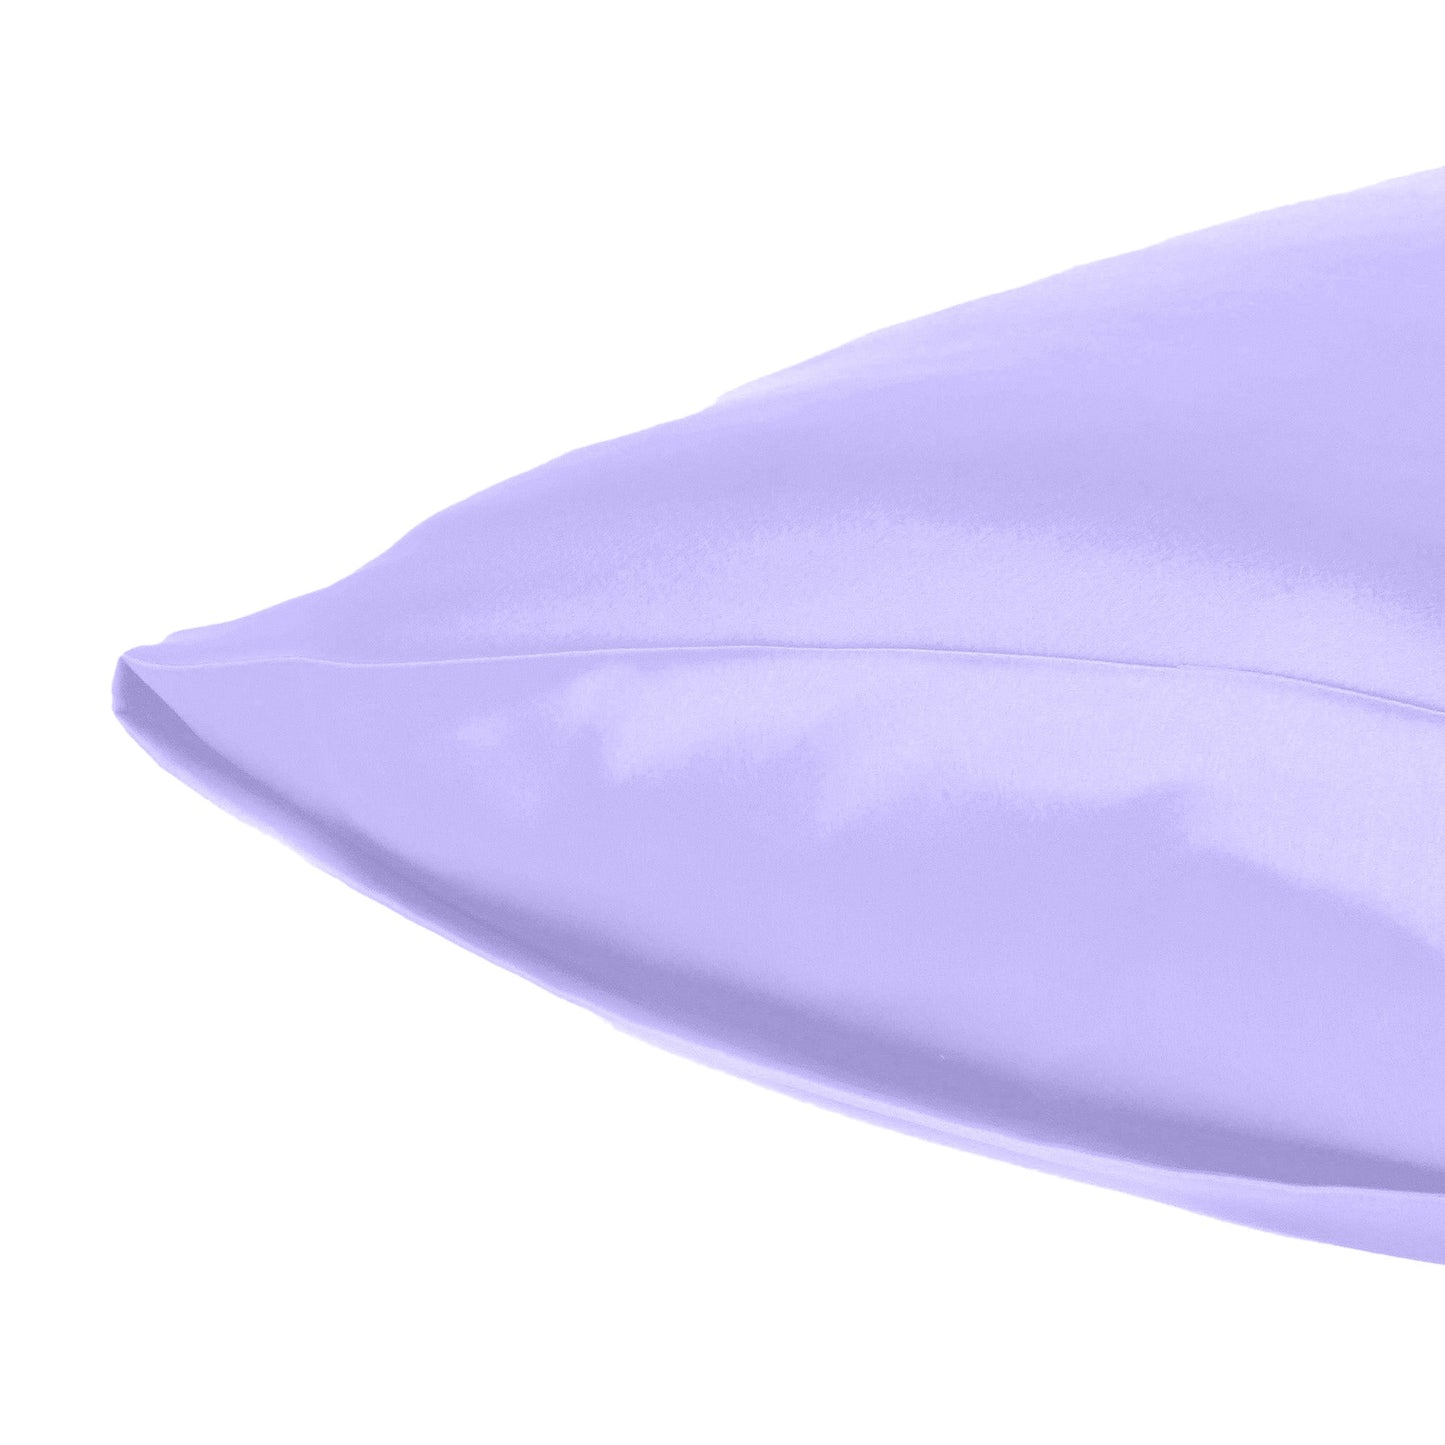 Luxury Soft Plain Satin Silk Pillowcases in Set of 2 - Dahlia Purple